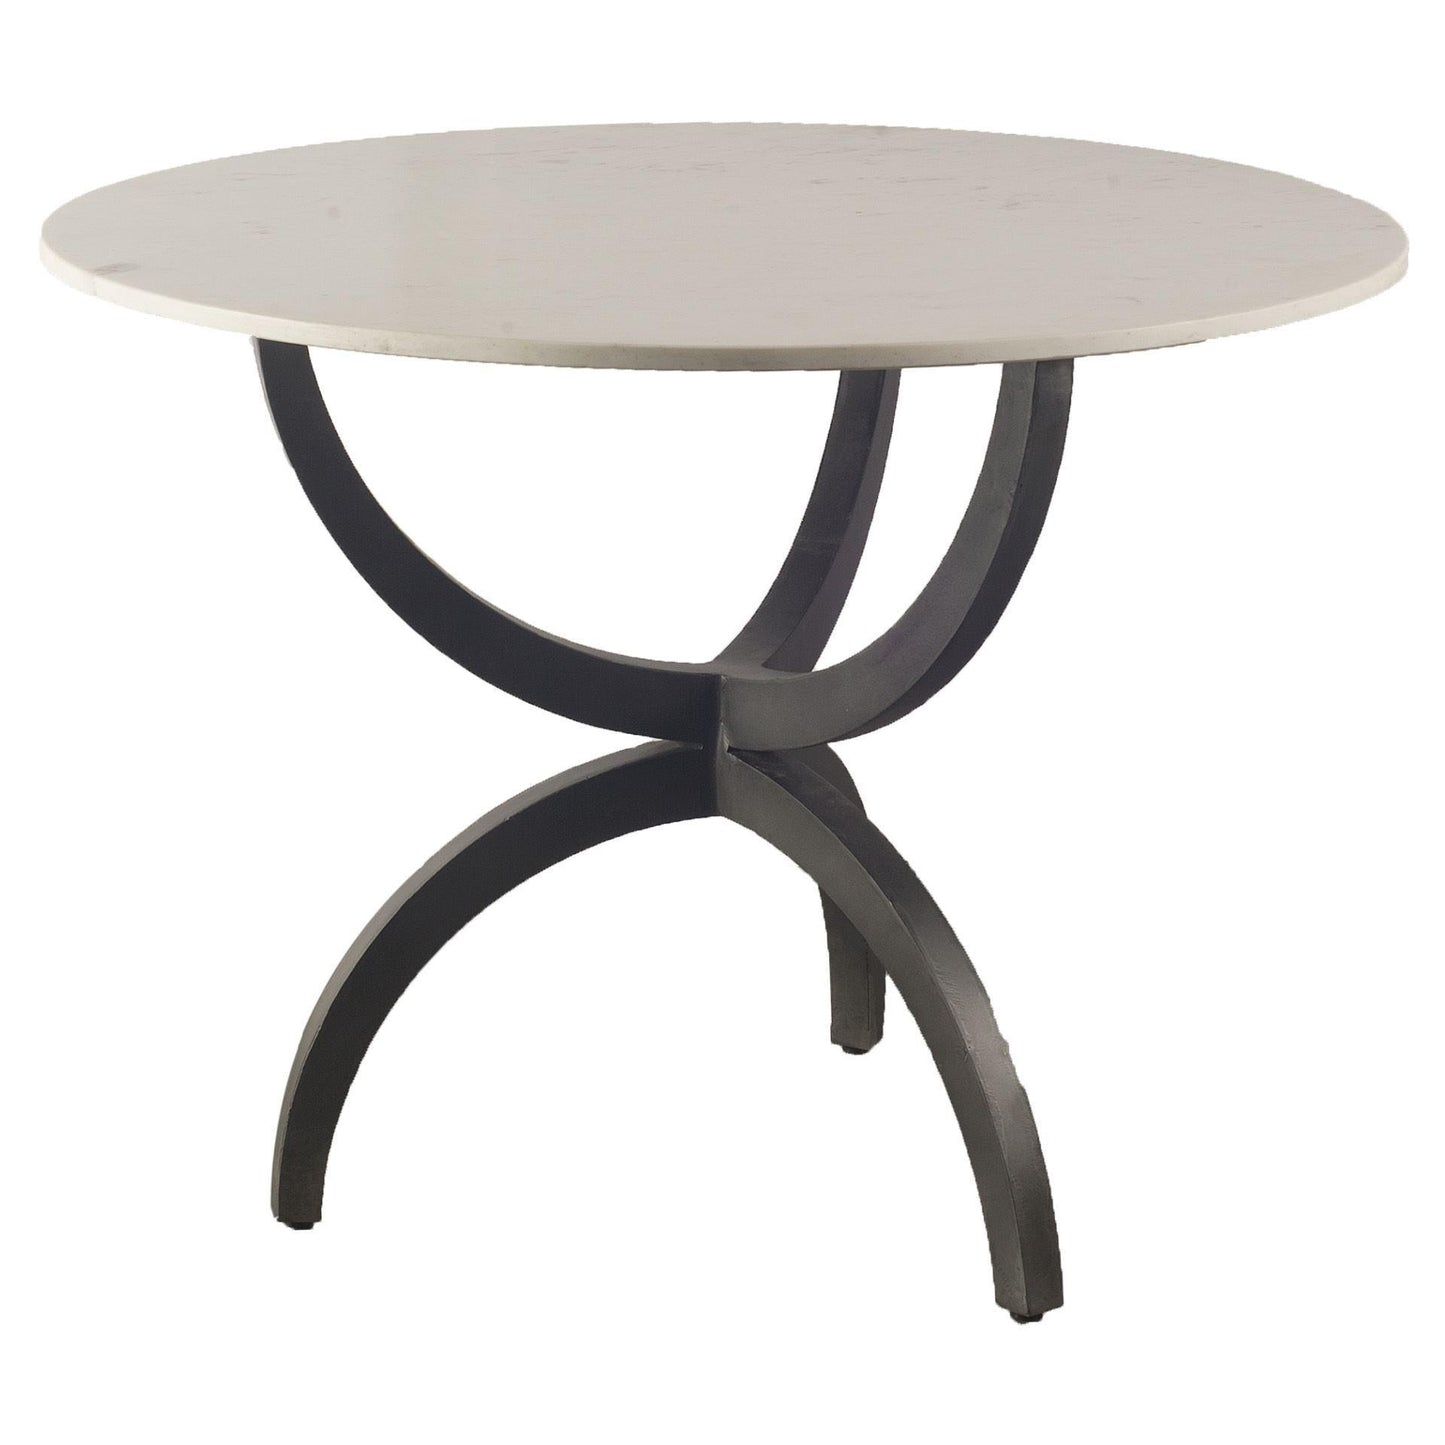 Veneto Table - 4 Arm Chairs